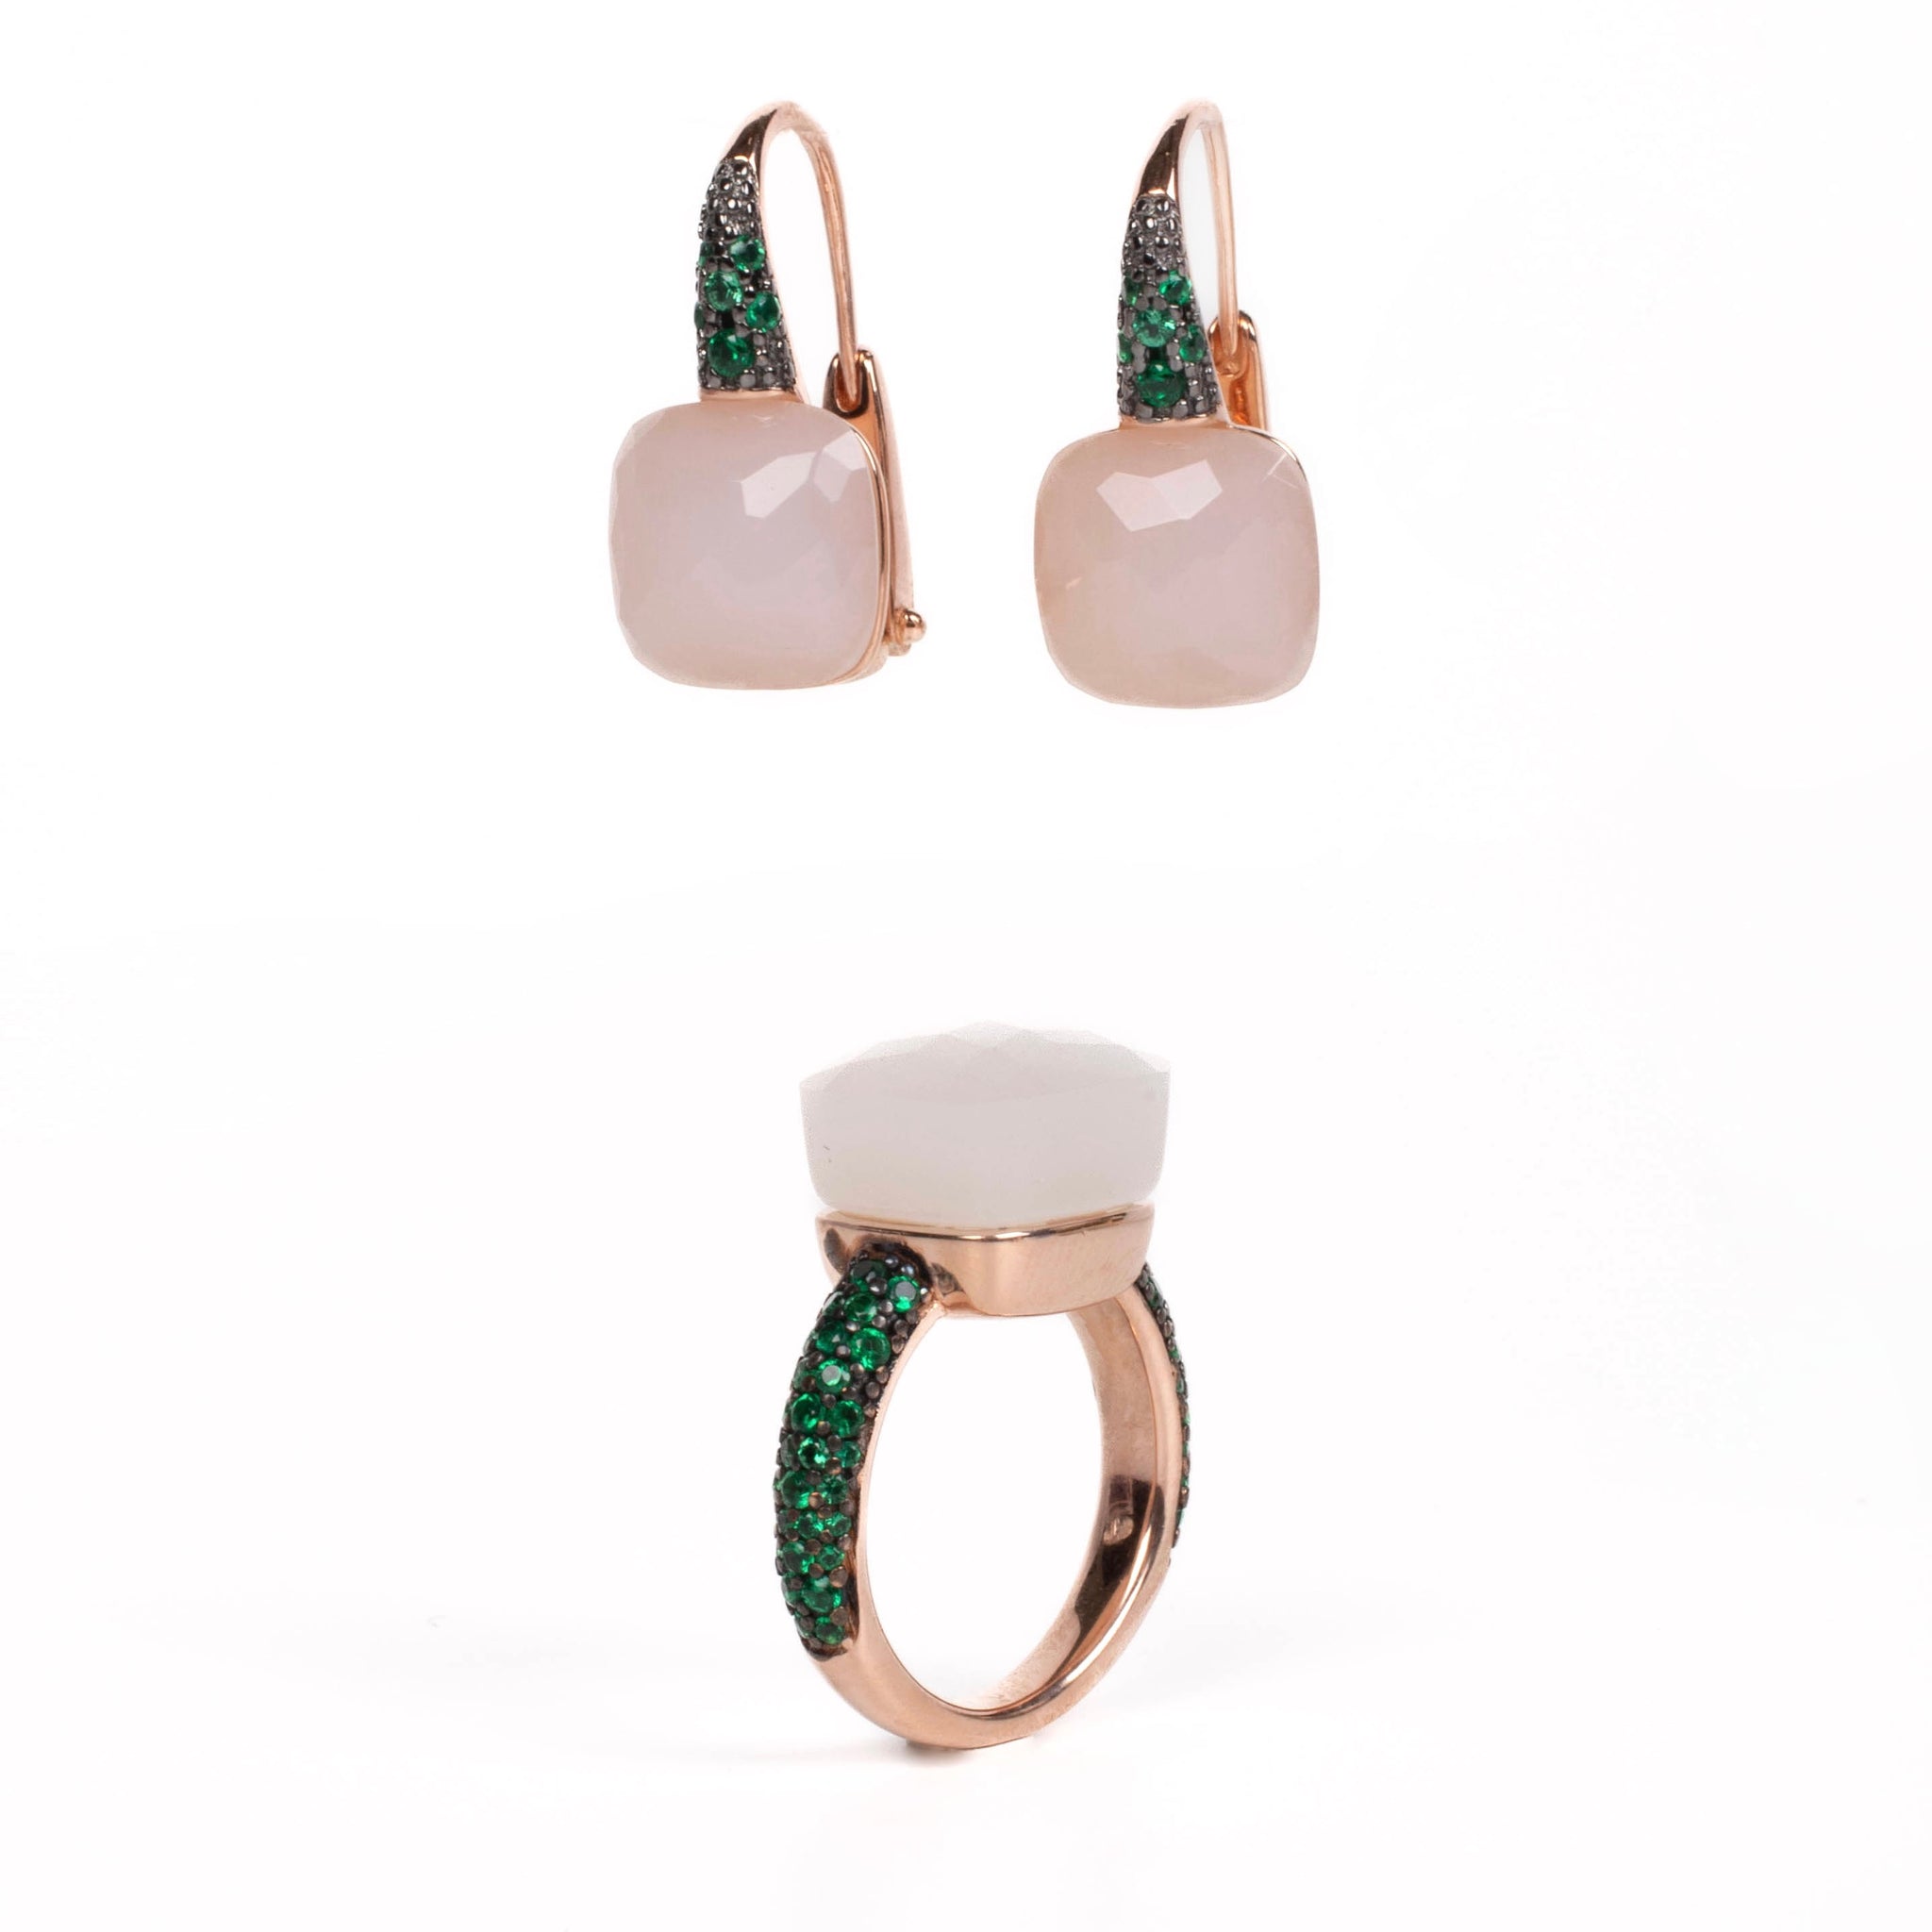 Ela Emerald and Moonstone Ring